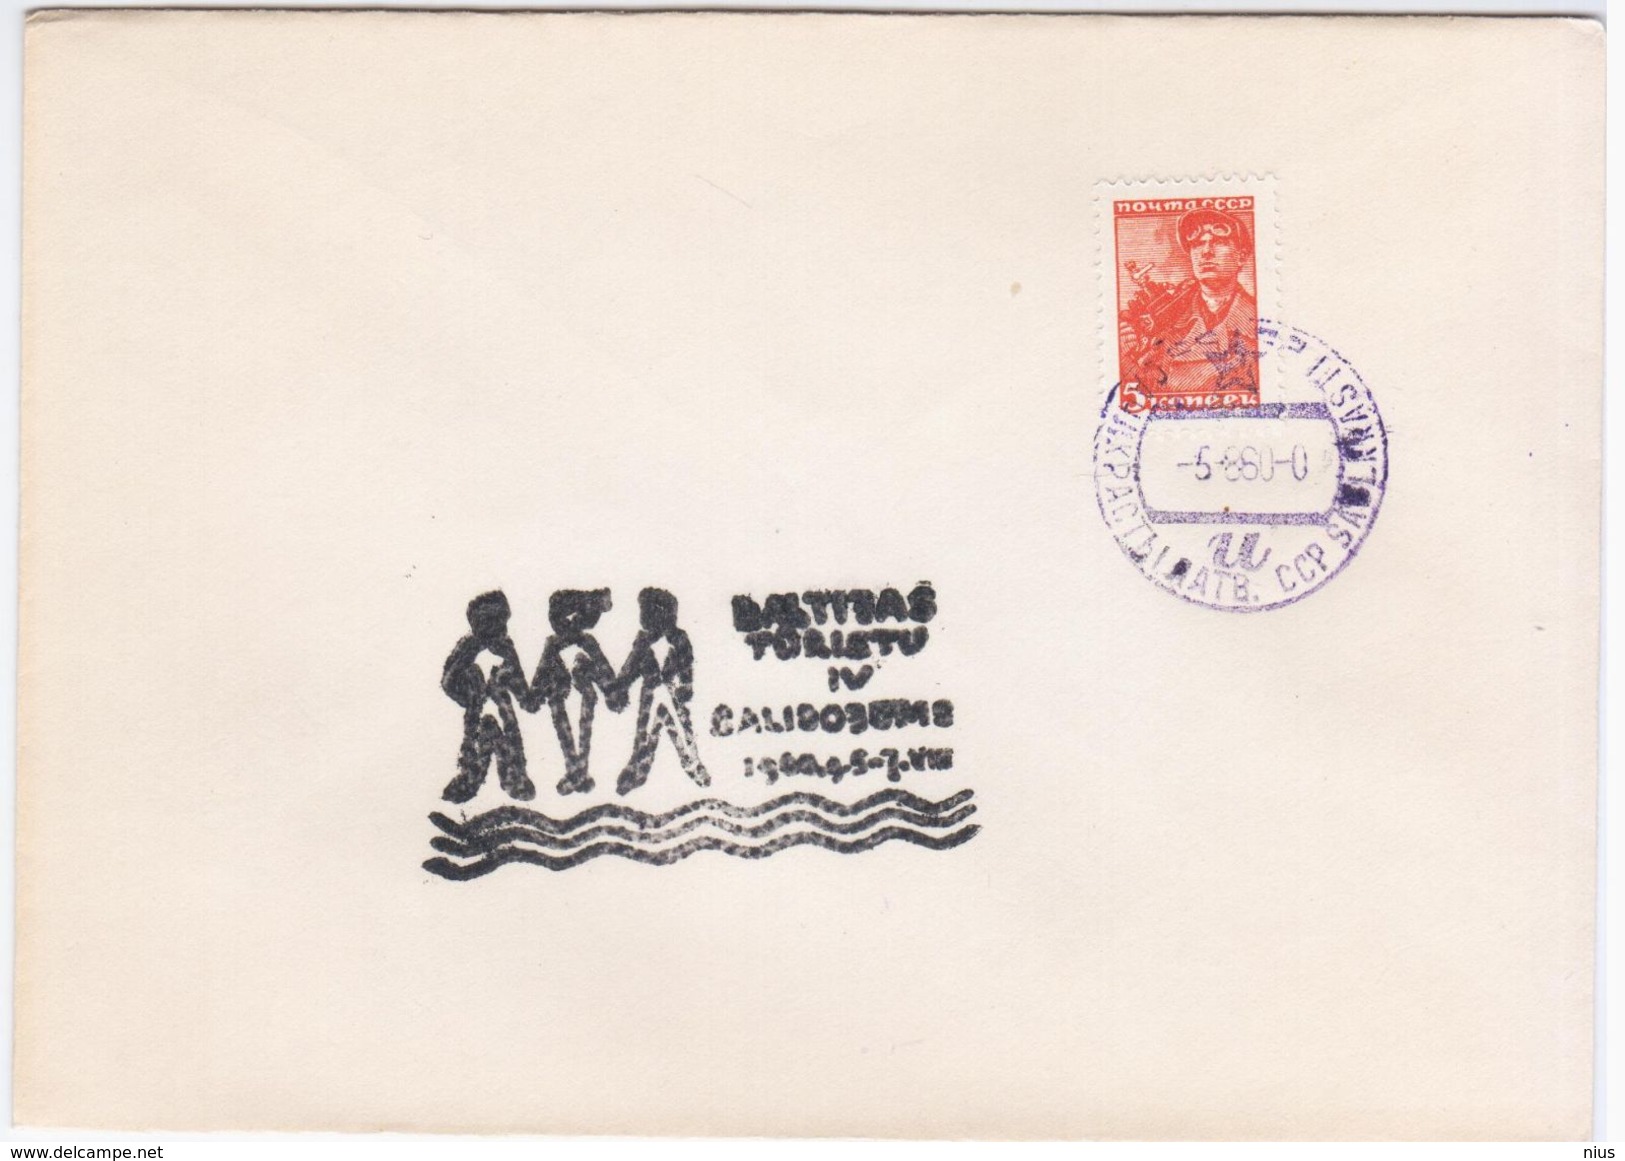 Latvia USSR 1960 TOURISM HEALTH CARE, Envelope, Canceled In Saulkrasti - Letland